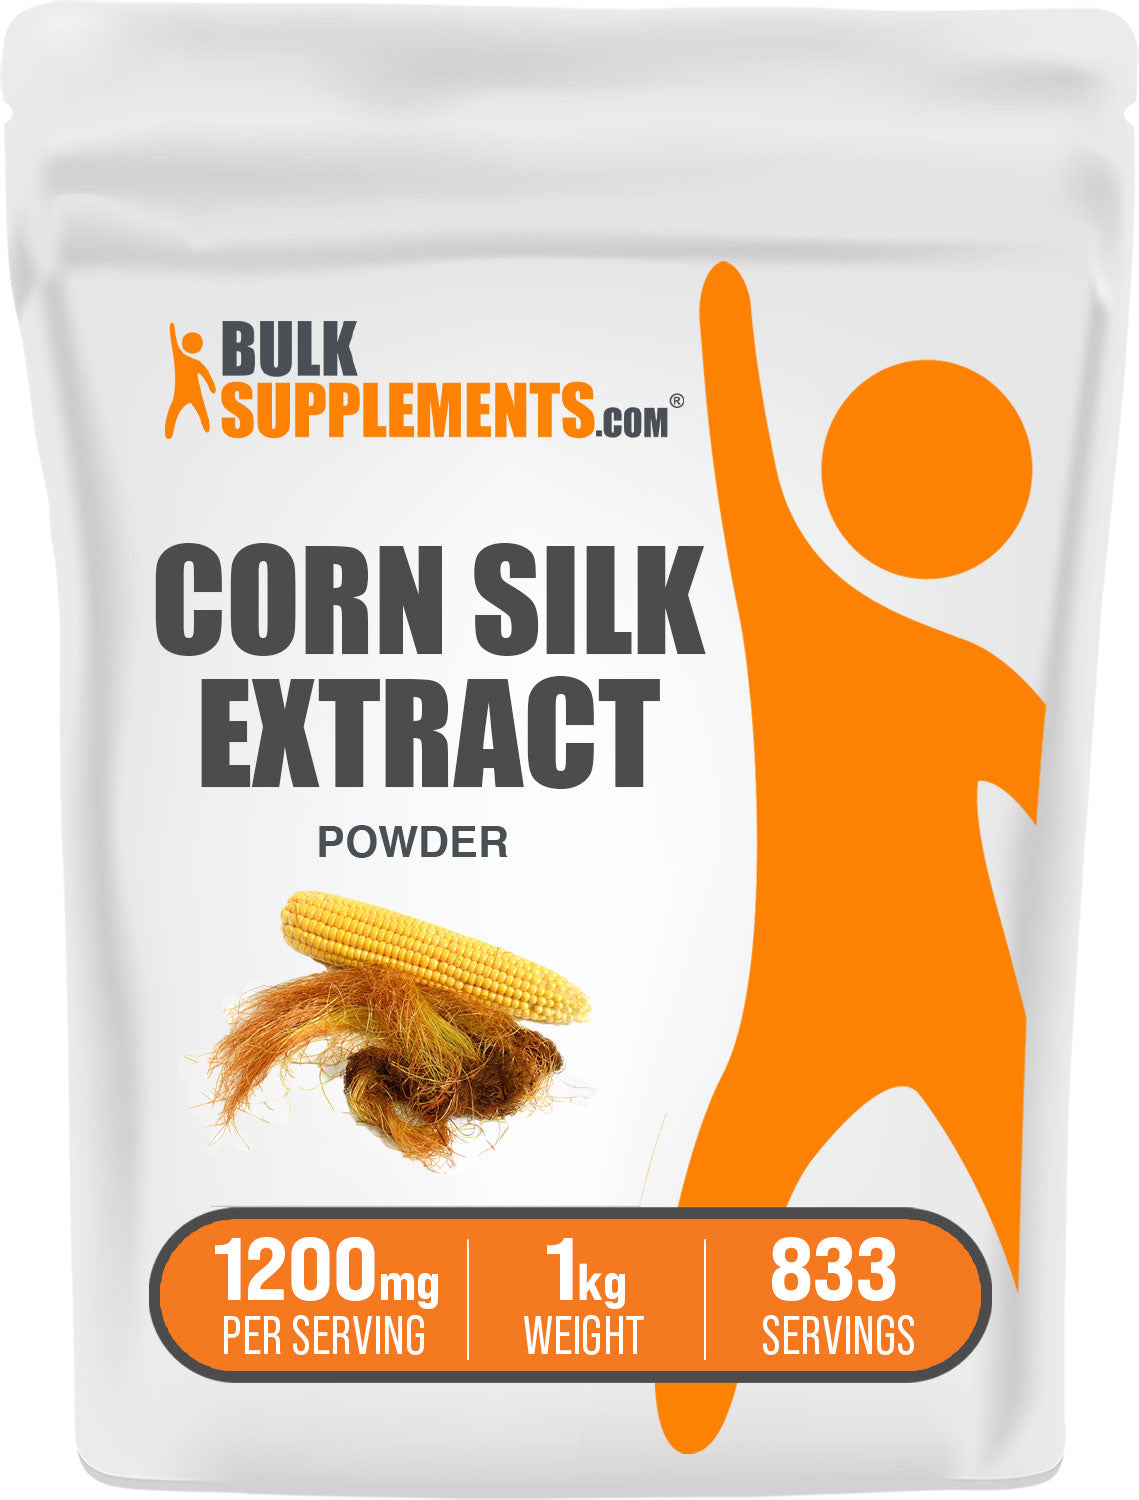 1kg Corn Silk Extract